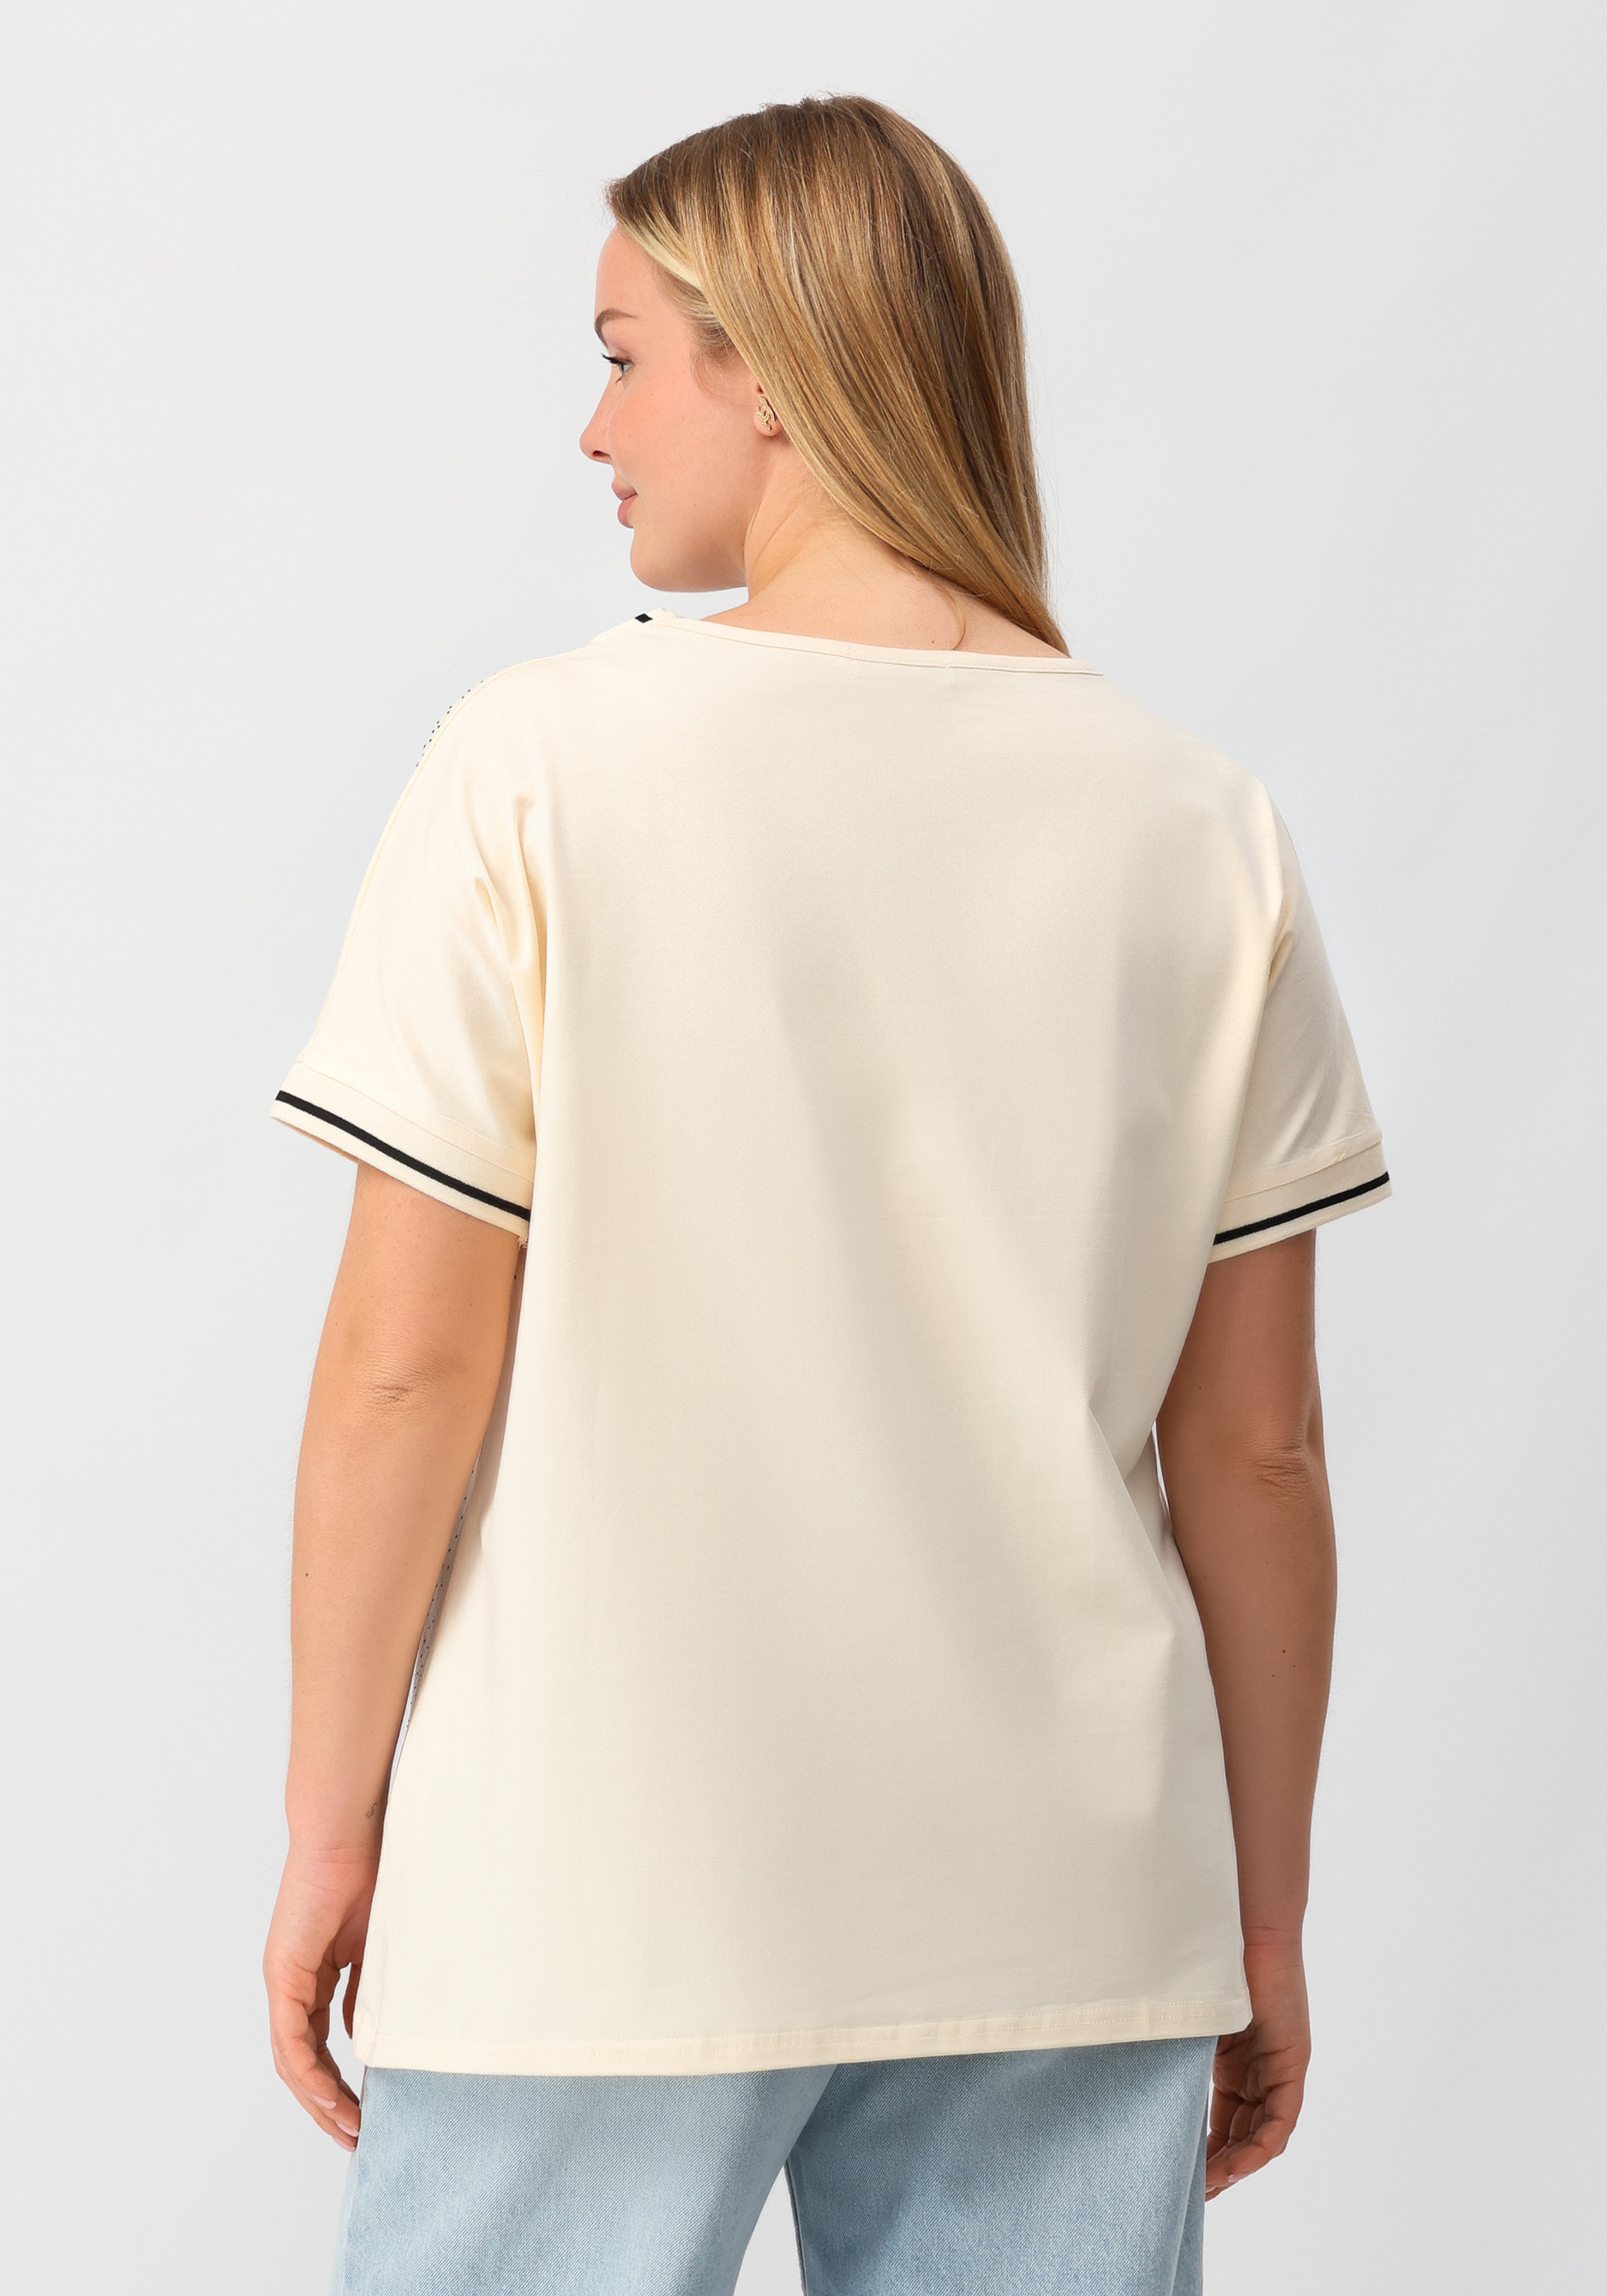 Блуза "Агнес" No name, размер 50, цвет бежевый - фото 3